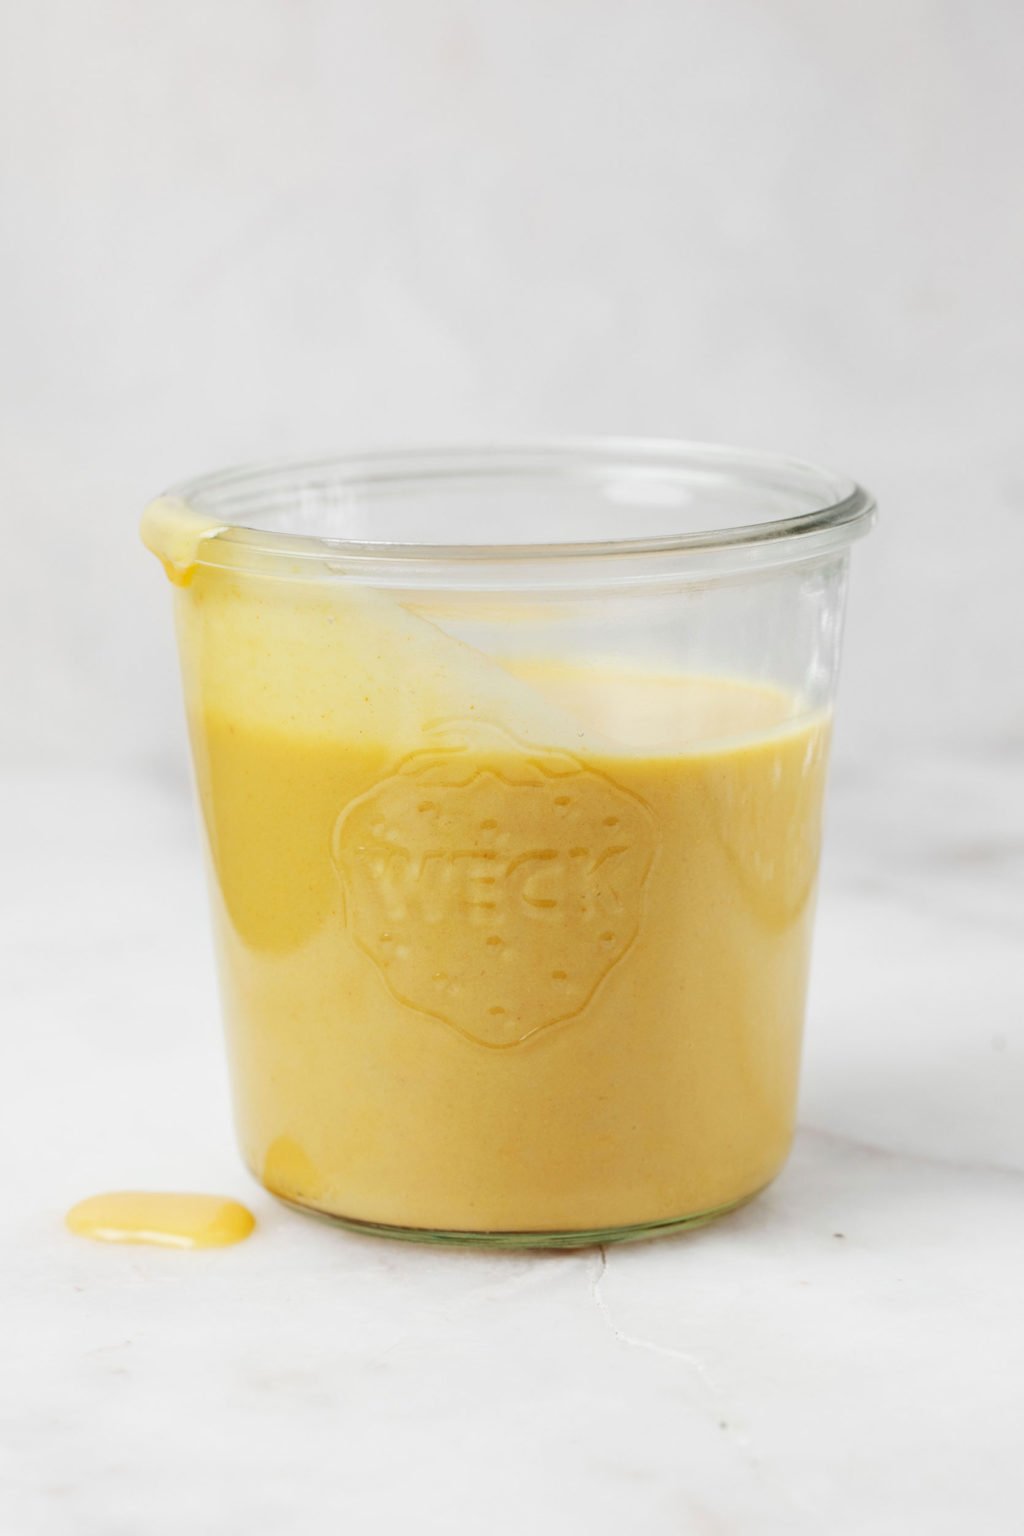 Das Glas enthält gelbe, vegane Cheddar-Käse-Sauce.